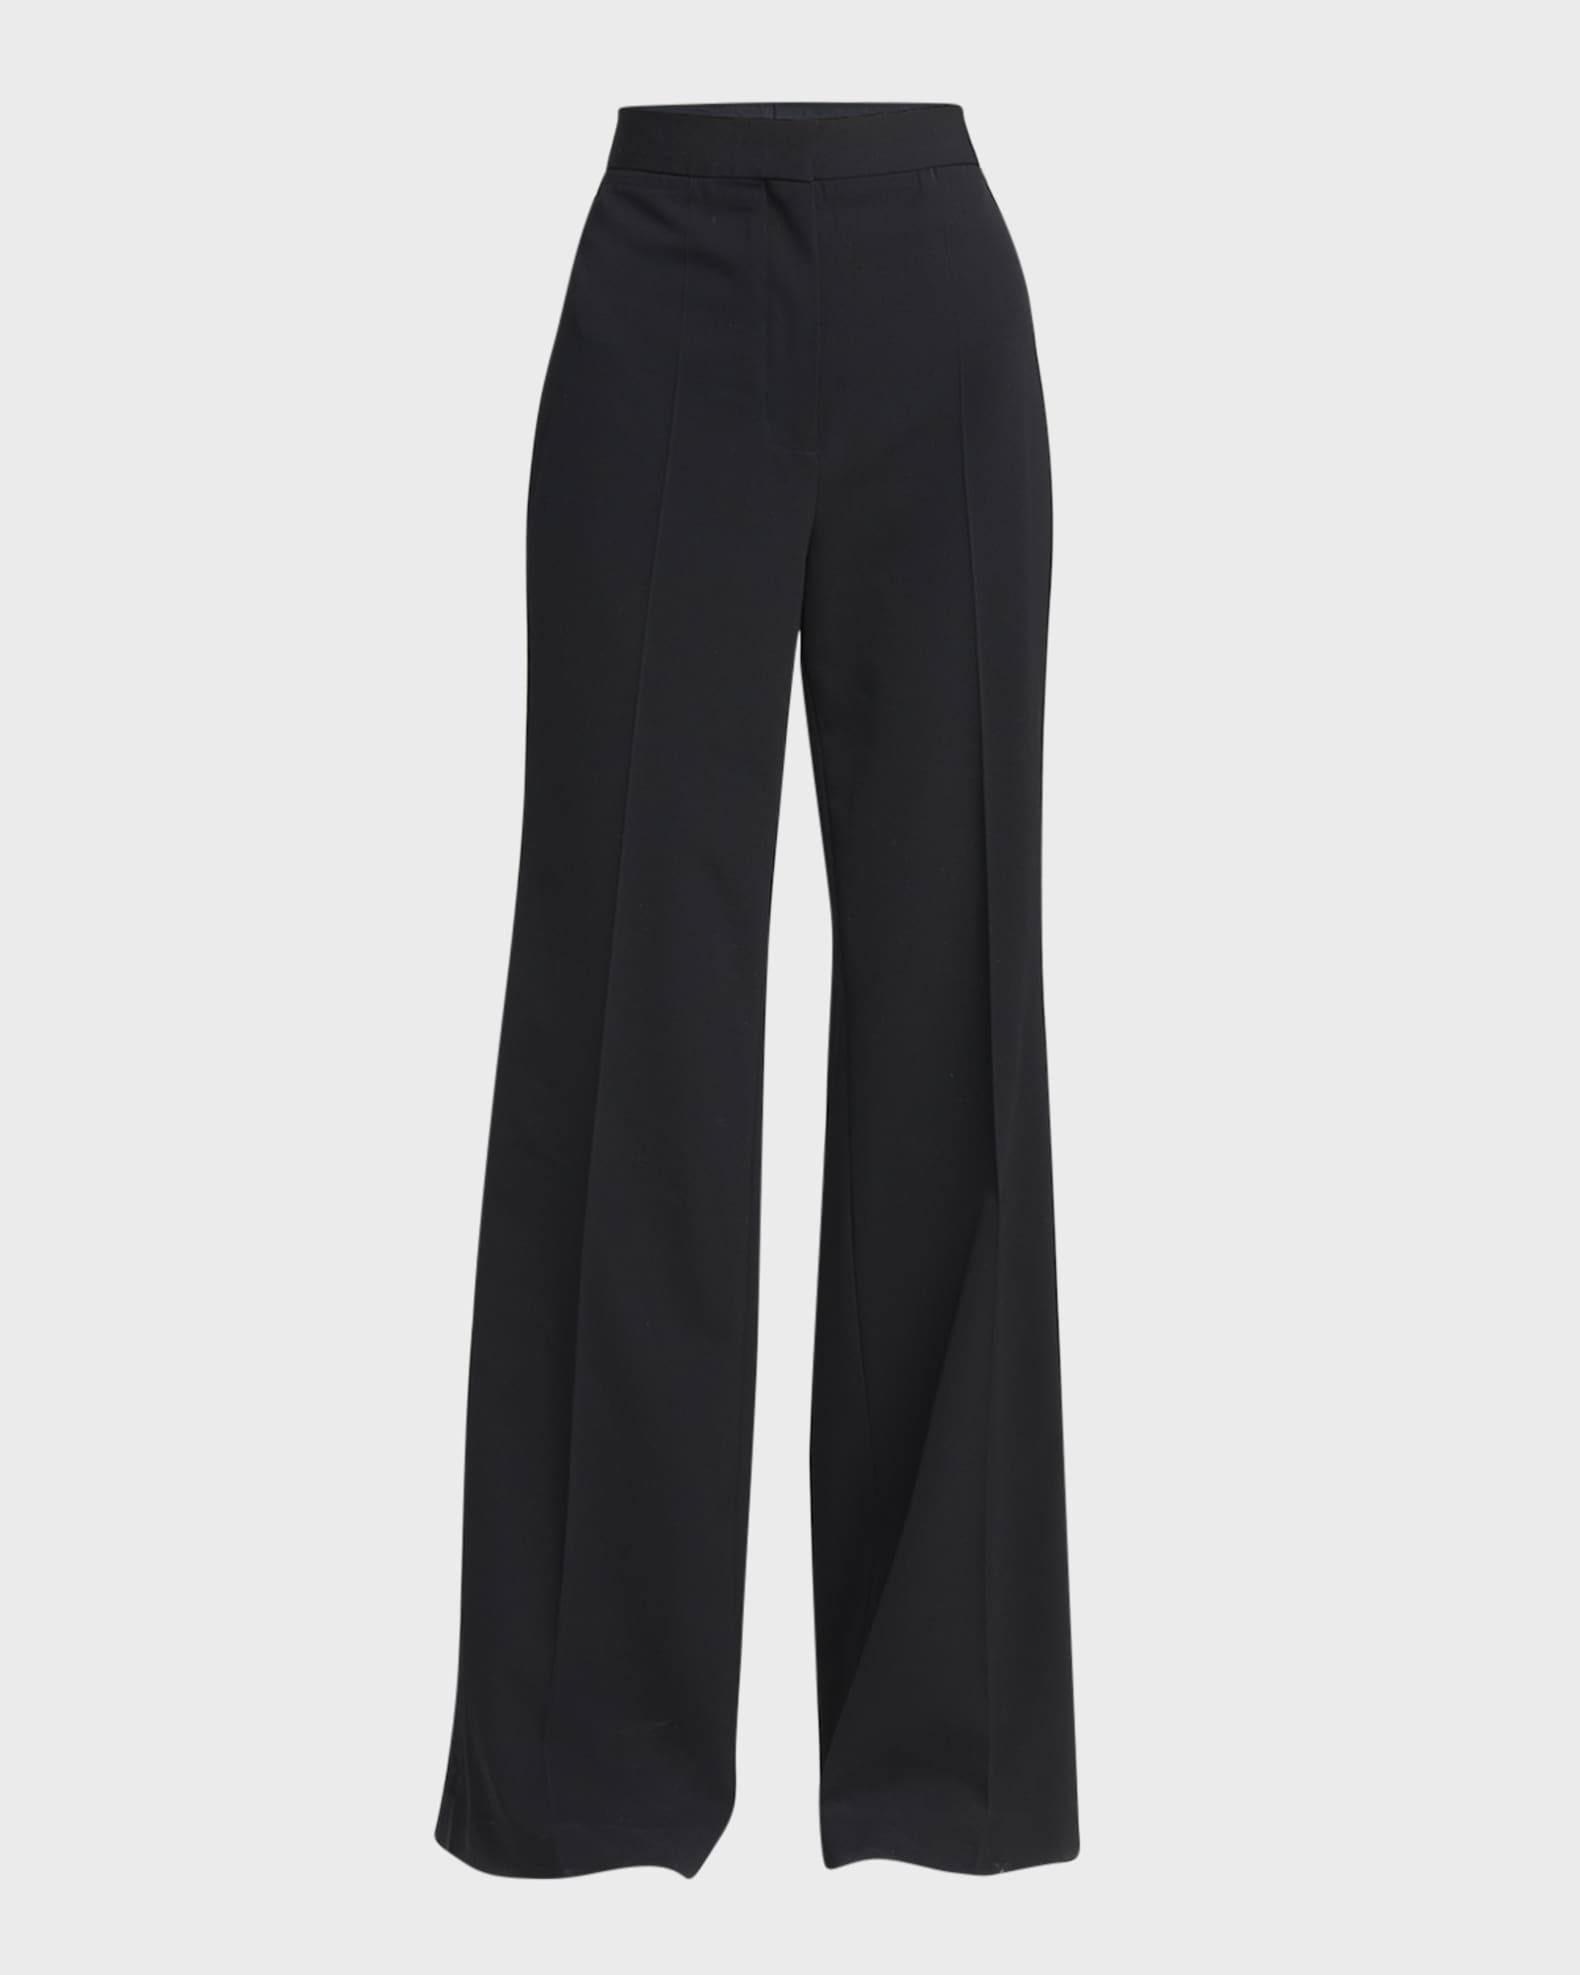 Stella McCartney High Waisted Sailor Pants, $1,090, Neiman Marcus